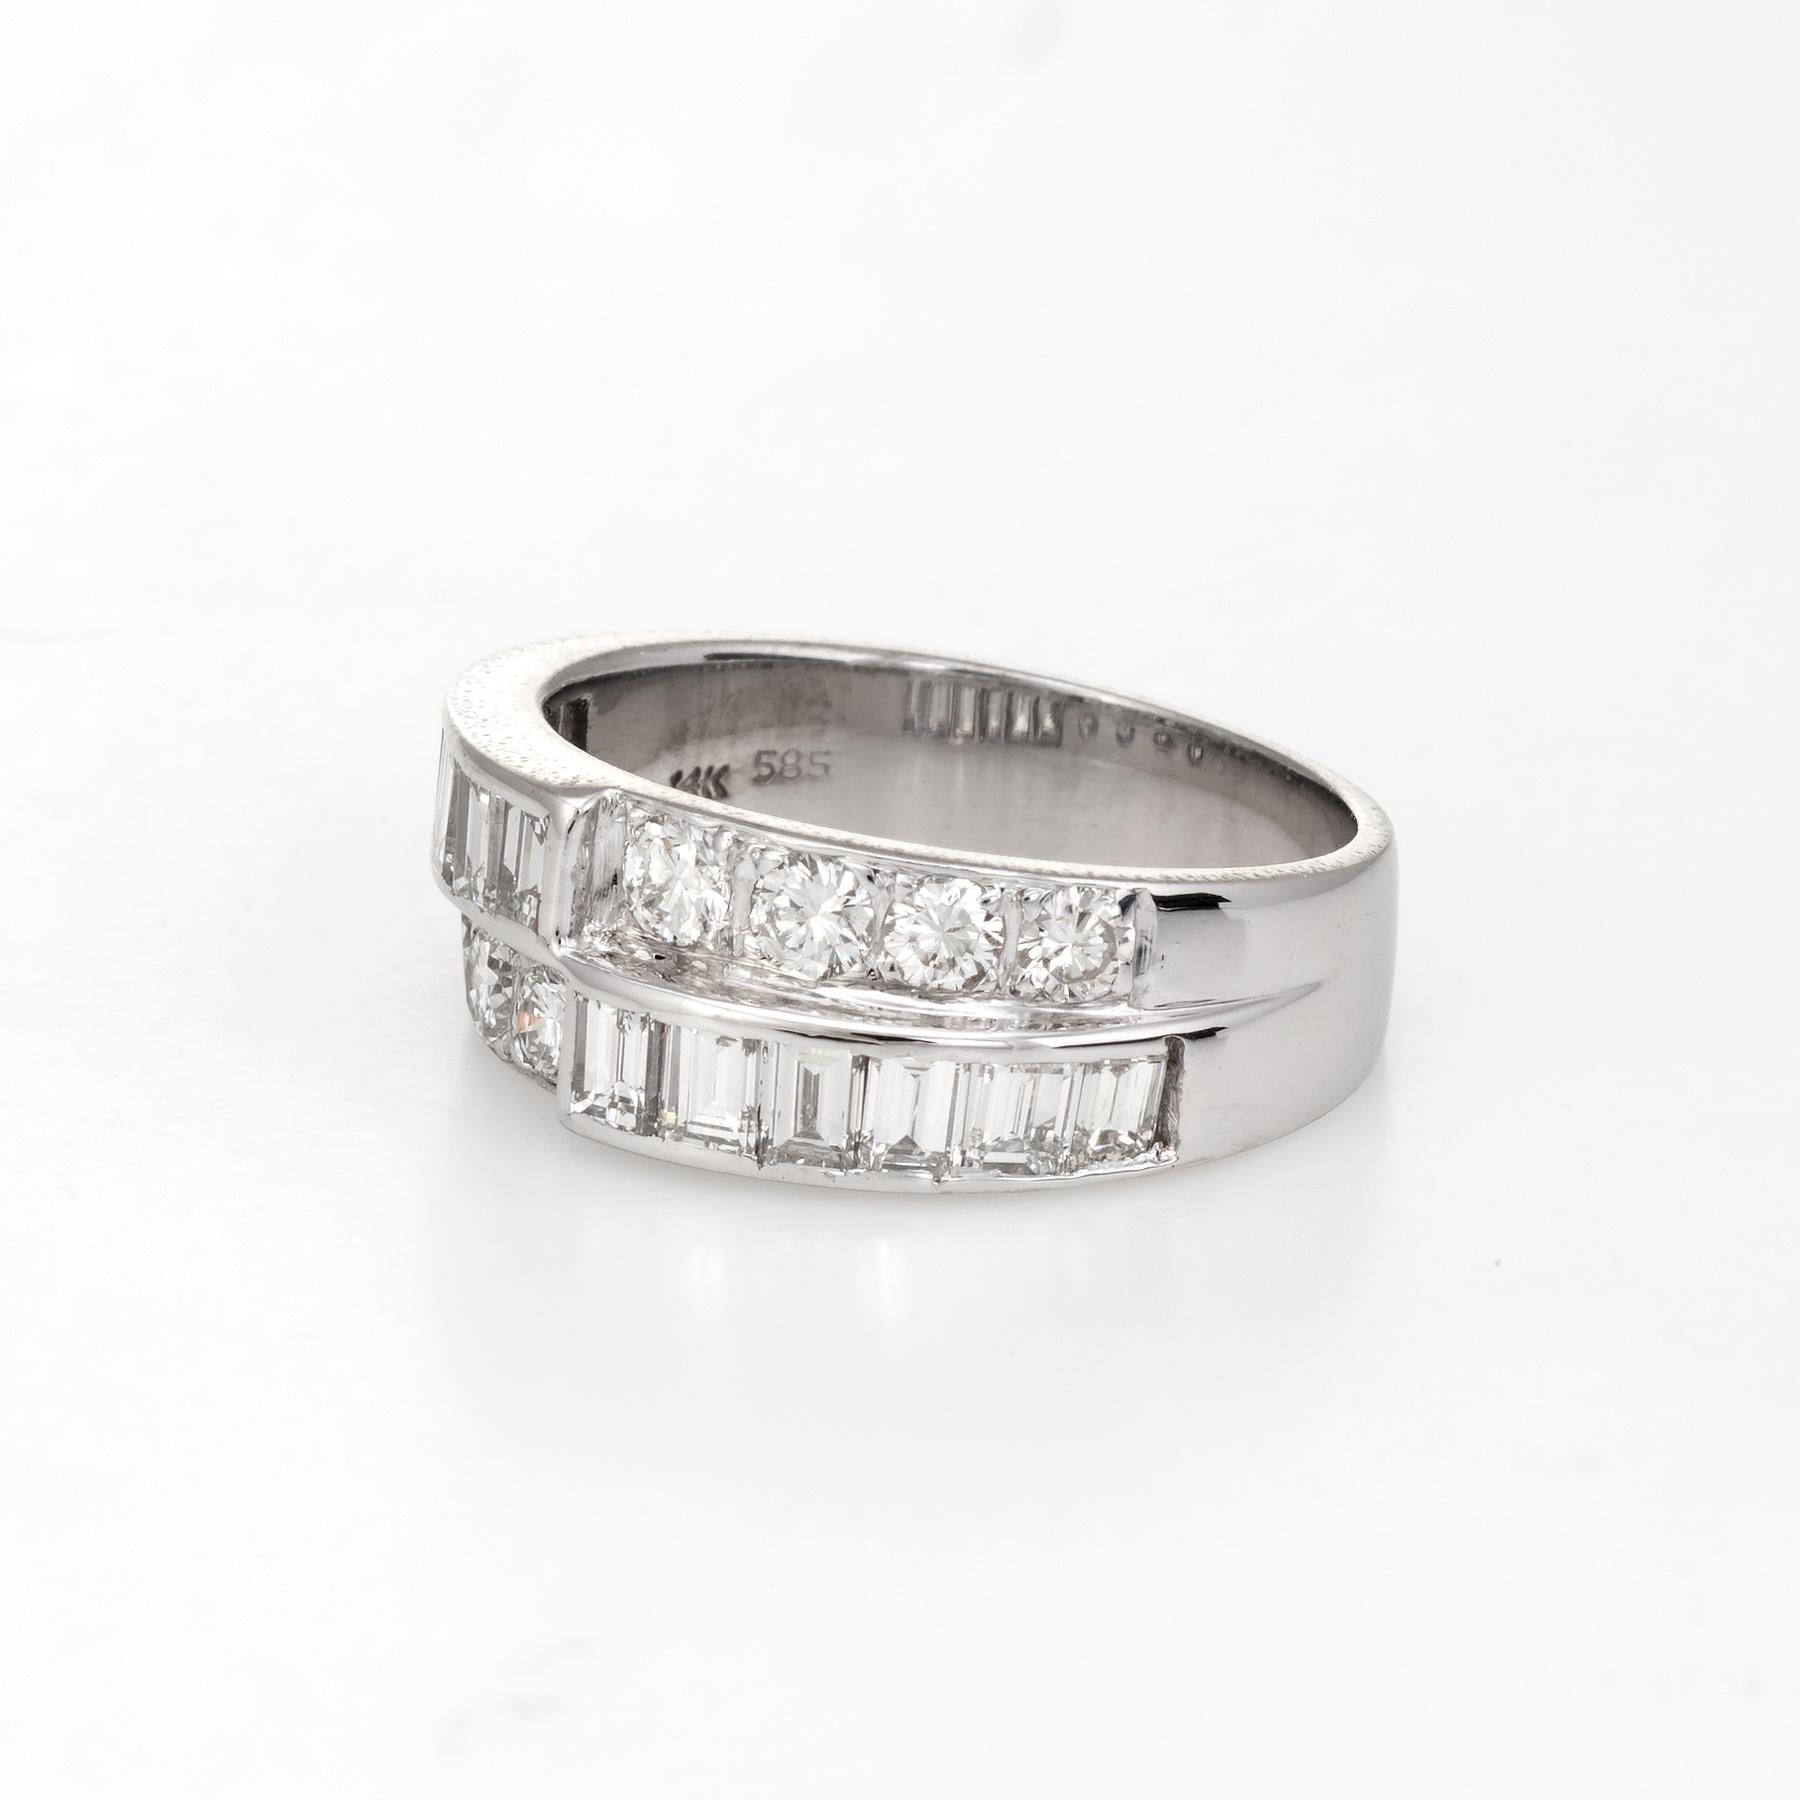 Brilliant Cut Vintage Diamond Wedding Band 14k White Gold 1.60ctw Estate Bridal Jewelry 7.25